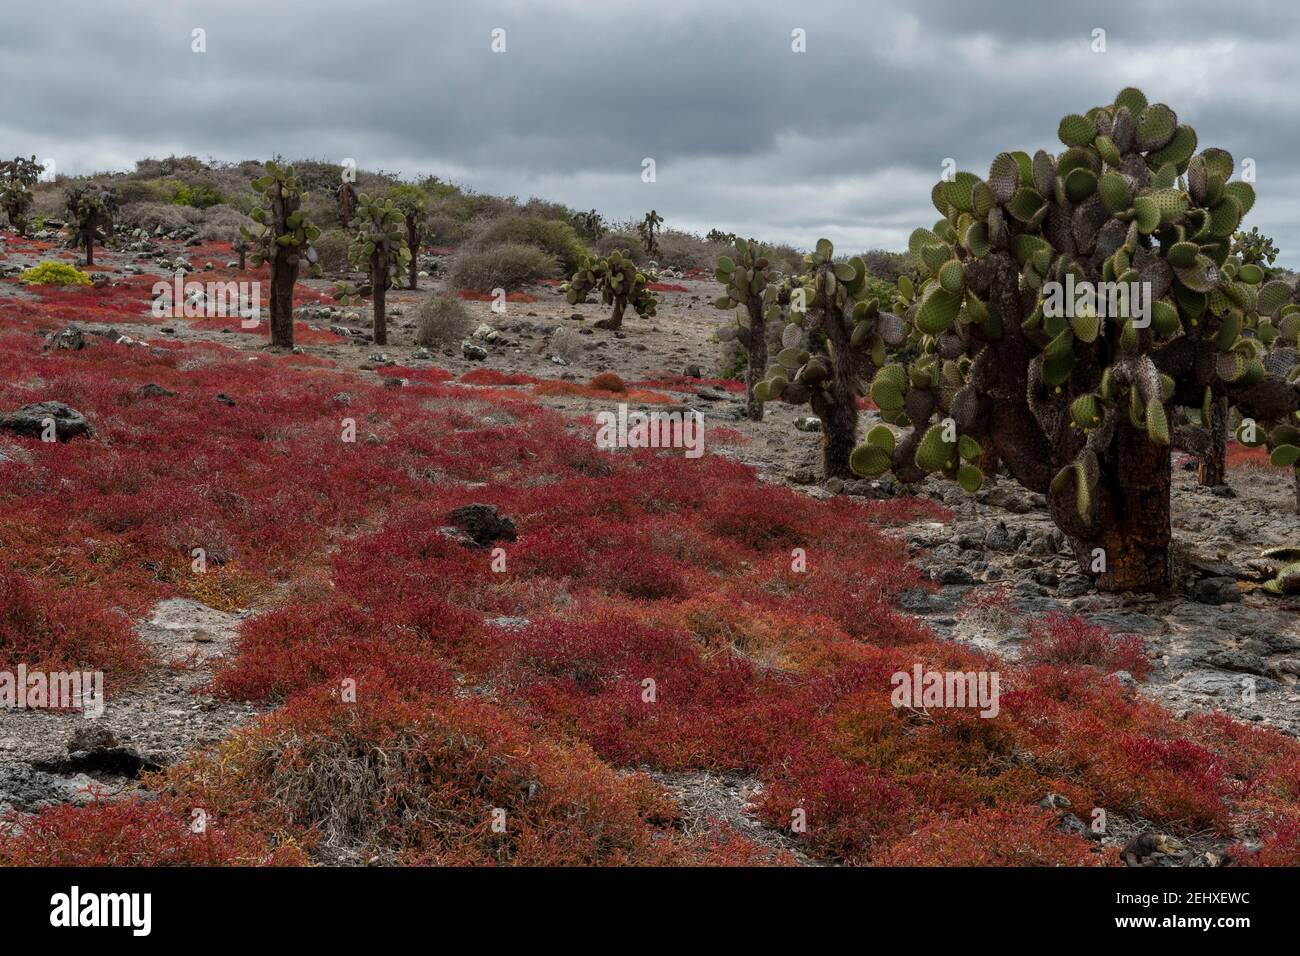 Sesuvium edmonstonei on South Plaza Island, Galapagos islands, Ecuador. Stock Photo